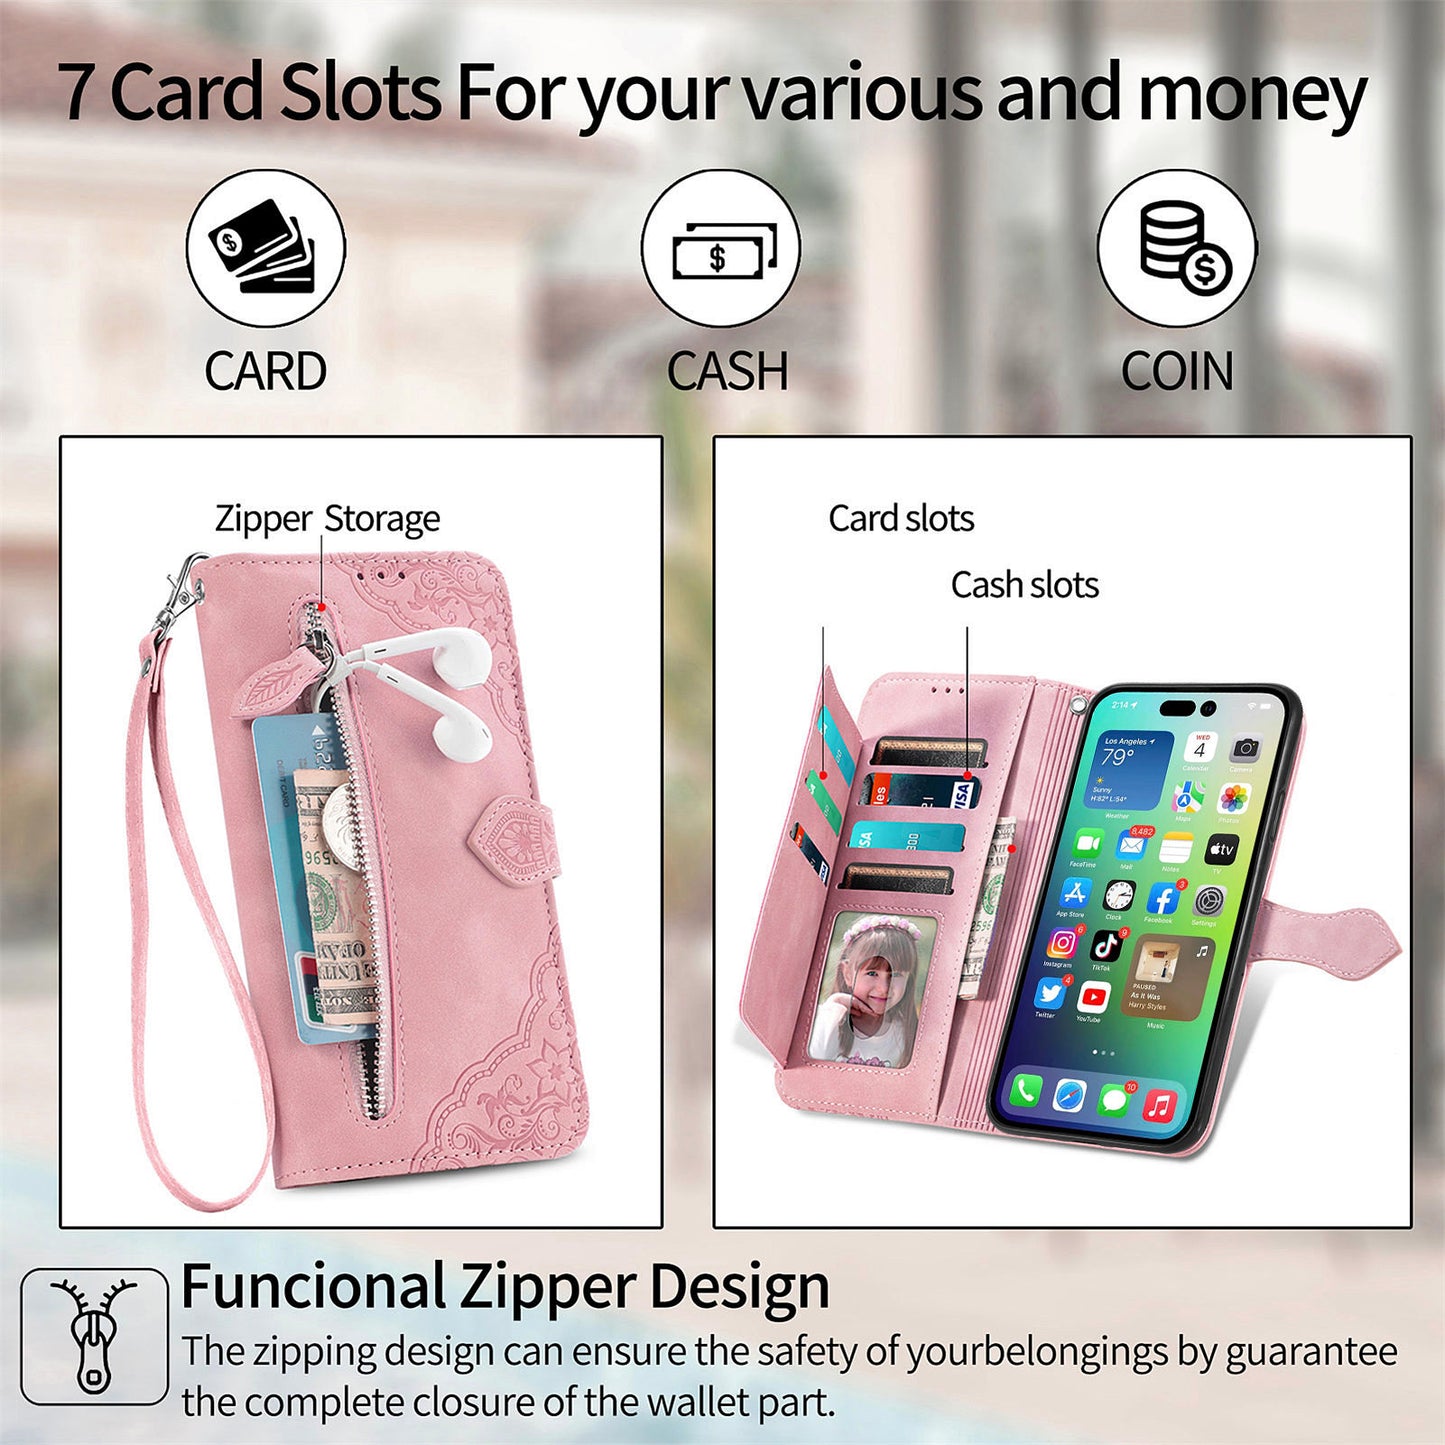 Versatile Elegance Wallet Flip Case for iPhone